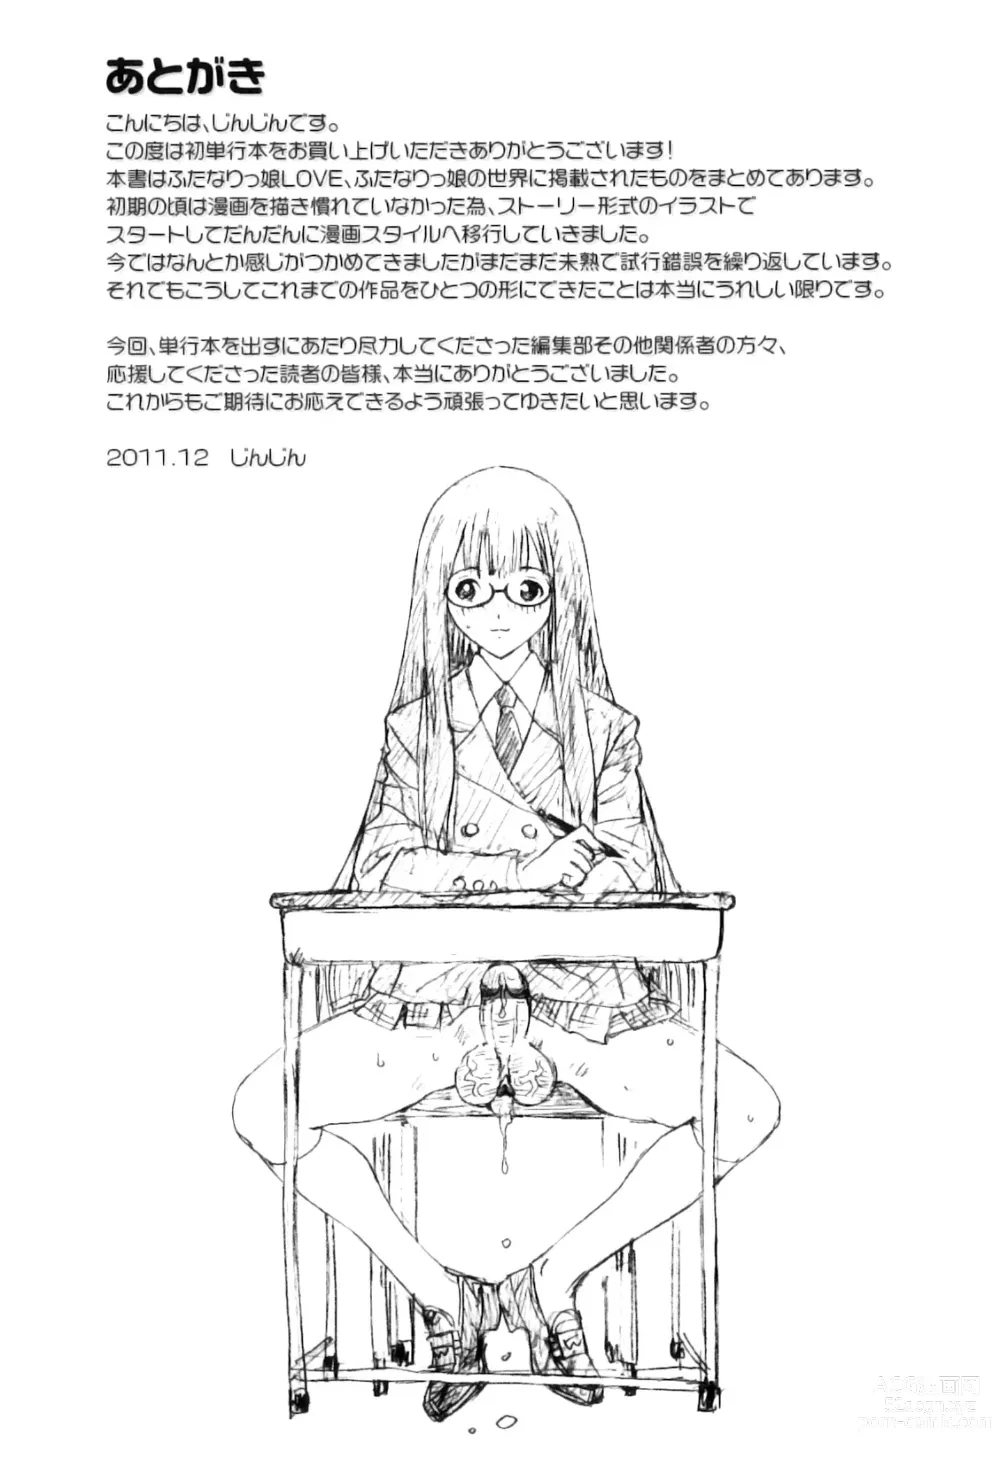 Page 210 of manga FutaSuki!